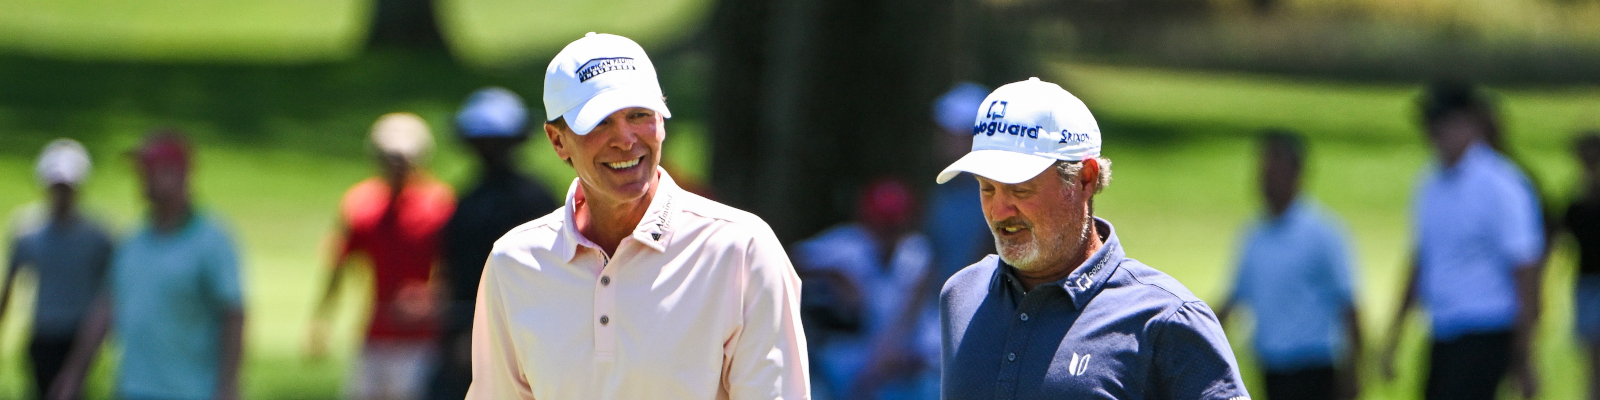 Steve Stricker und Jerry Kelly (Photo by Tracy Wilcox/PGA TOUR via Getty Images)